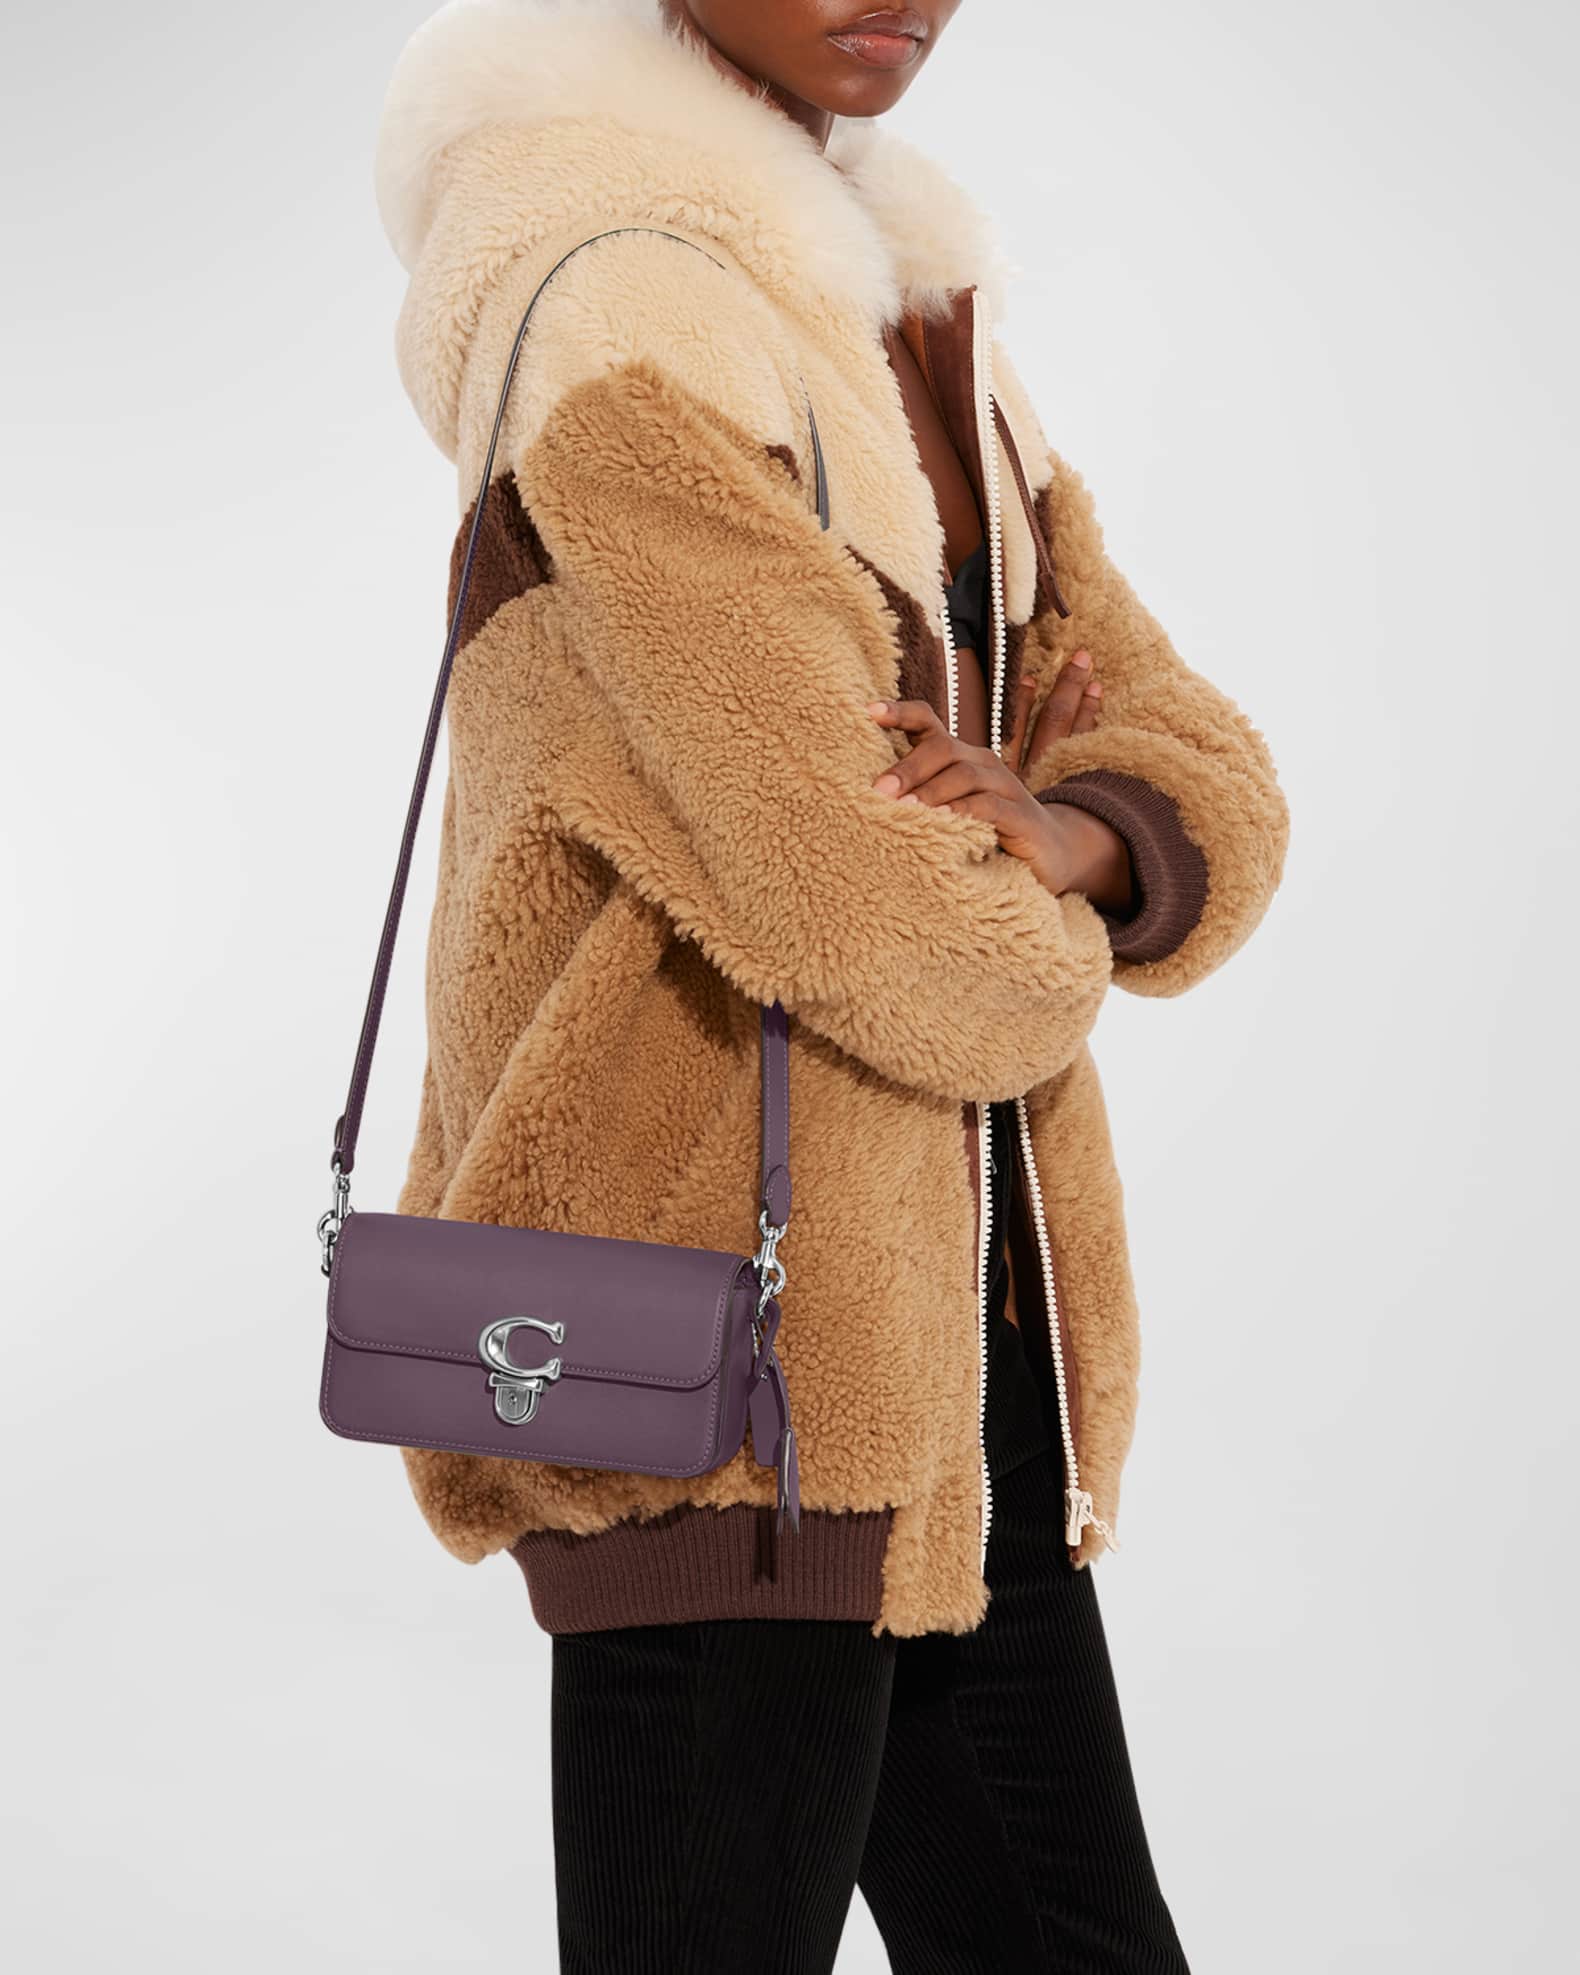 Coach Studio Flap Napa Leather Shoulder Bag | Neiman Marcus